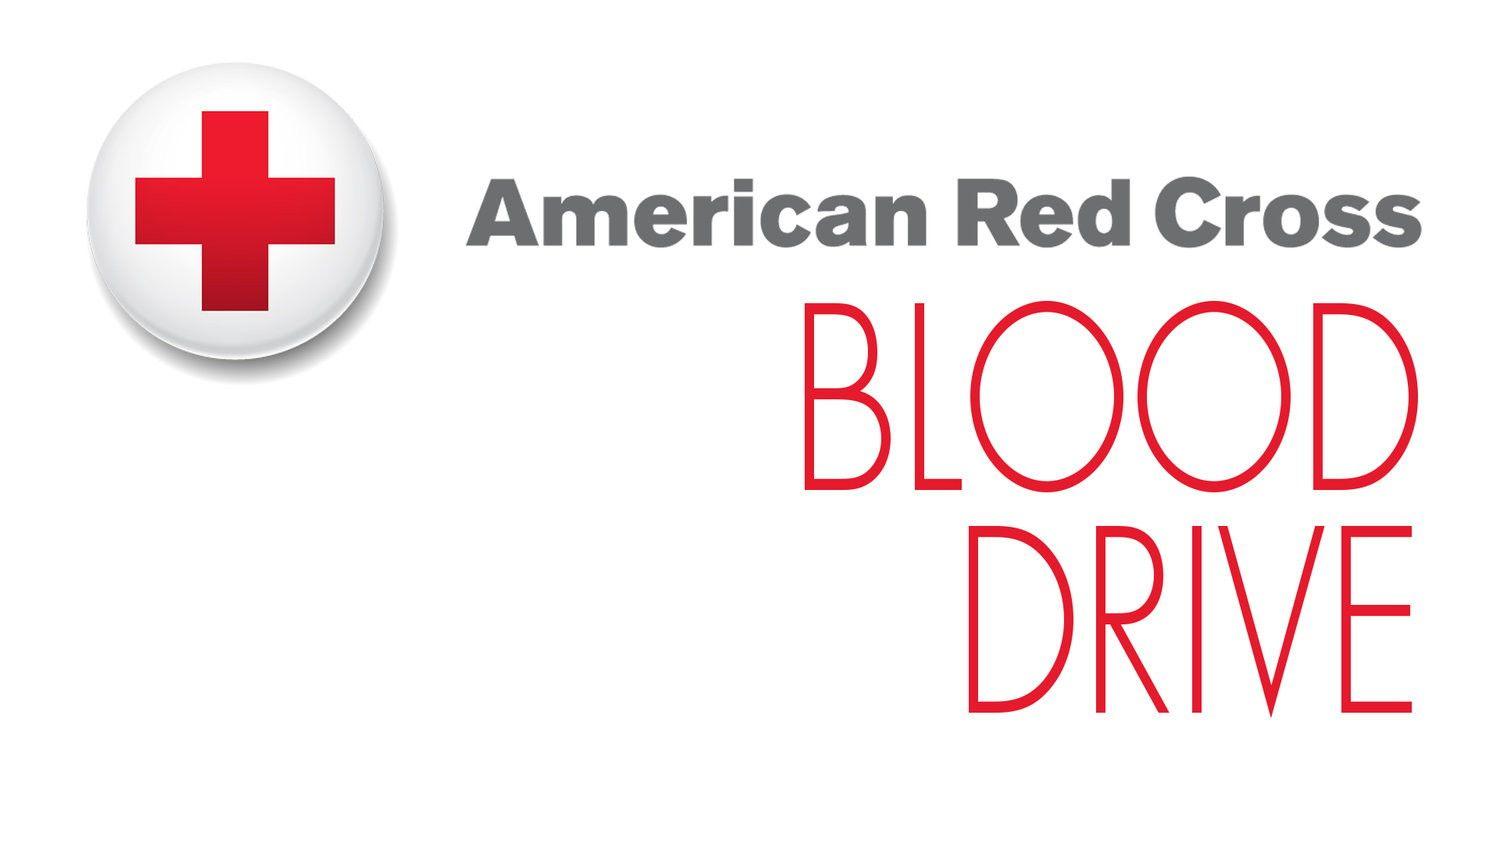 Red Cross Blood Drive Logo - Red Cross Blood Drive